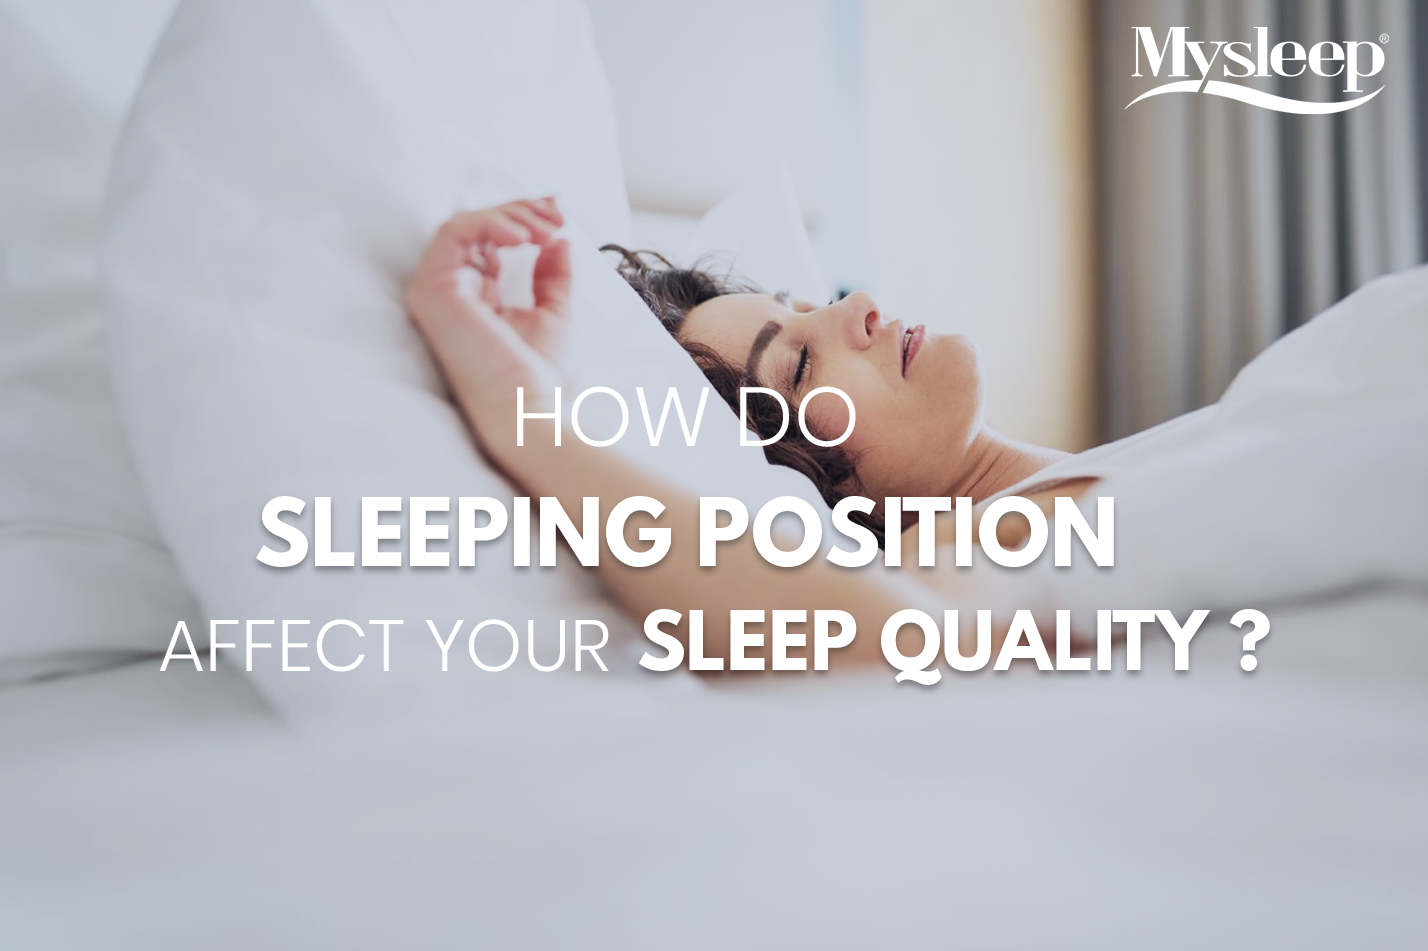 HOW DO SLEEPING POSITION AFFECT YOUR SLEEP QUALITY?